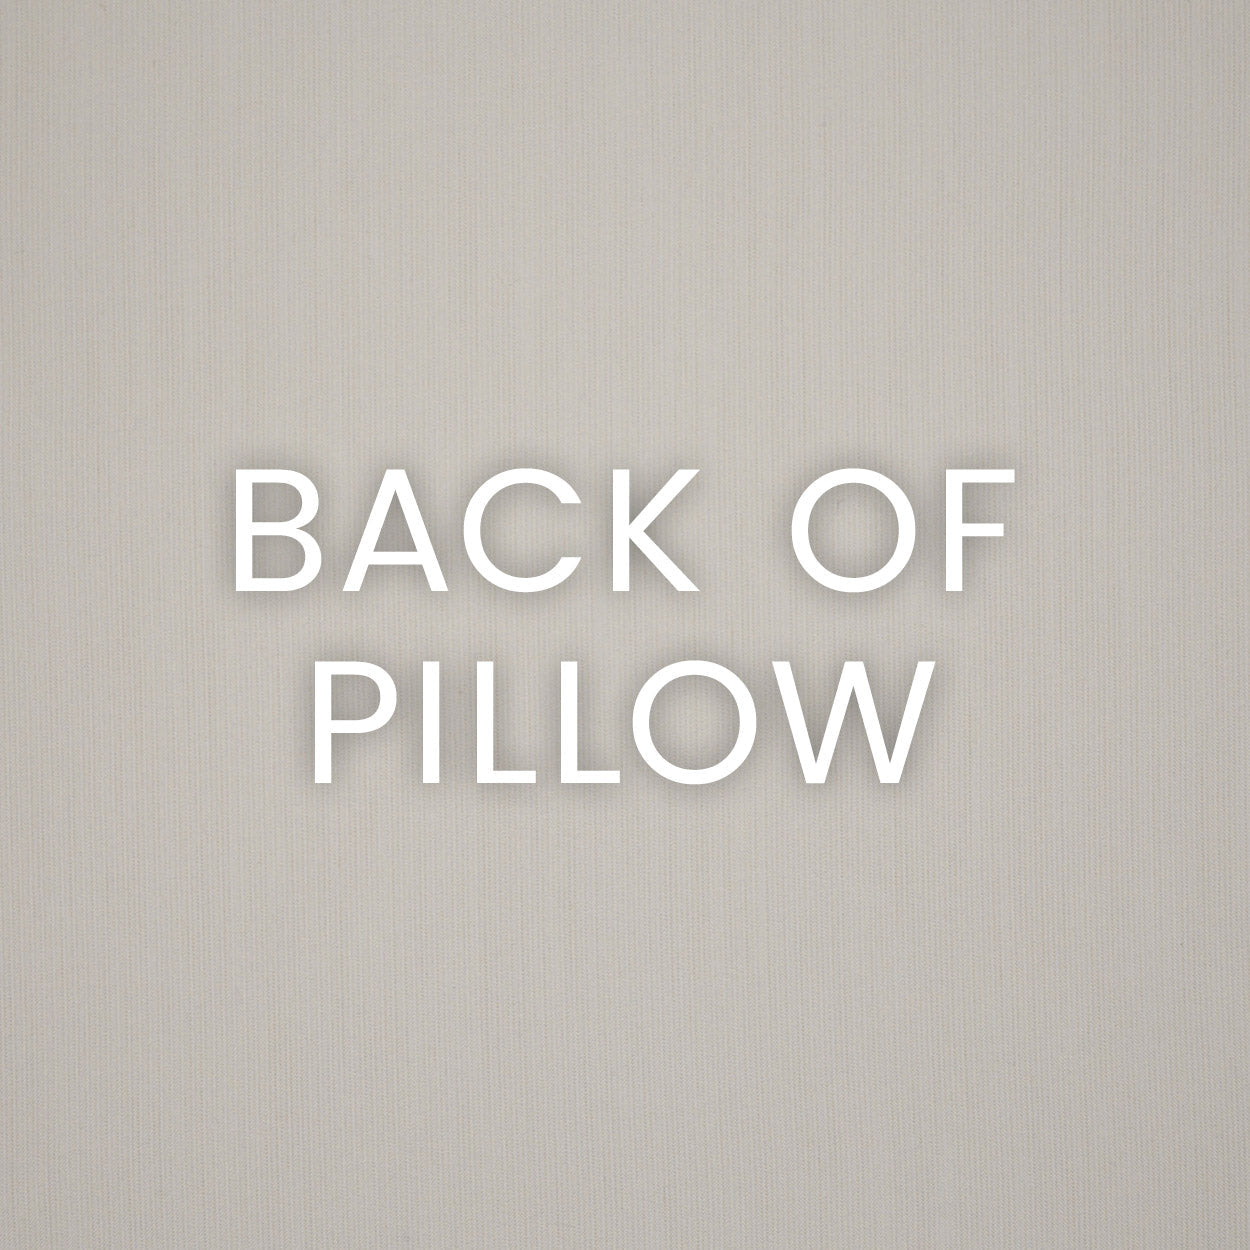 Outdoor Kitri Lumbar Pillow - Stone